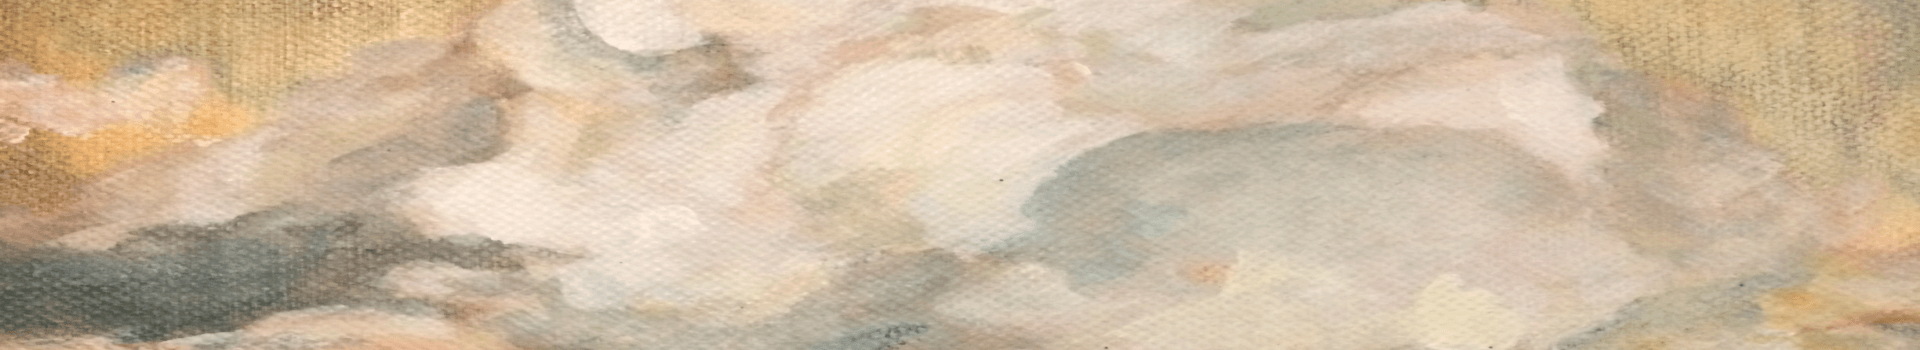 Cloud canvas painting